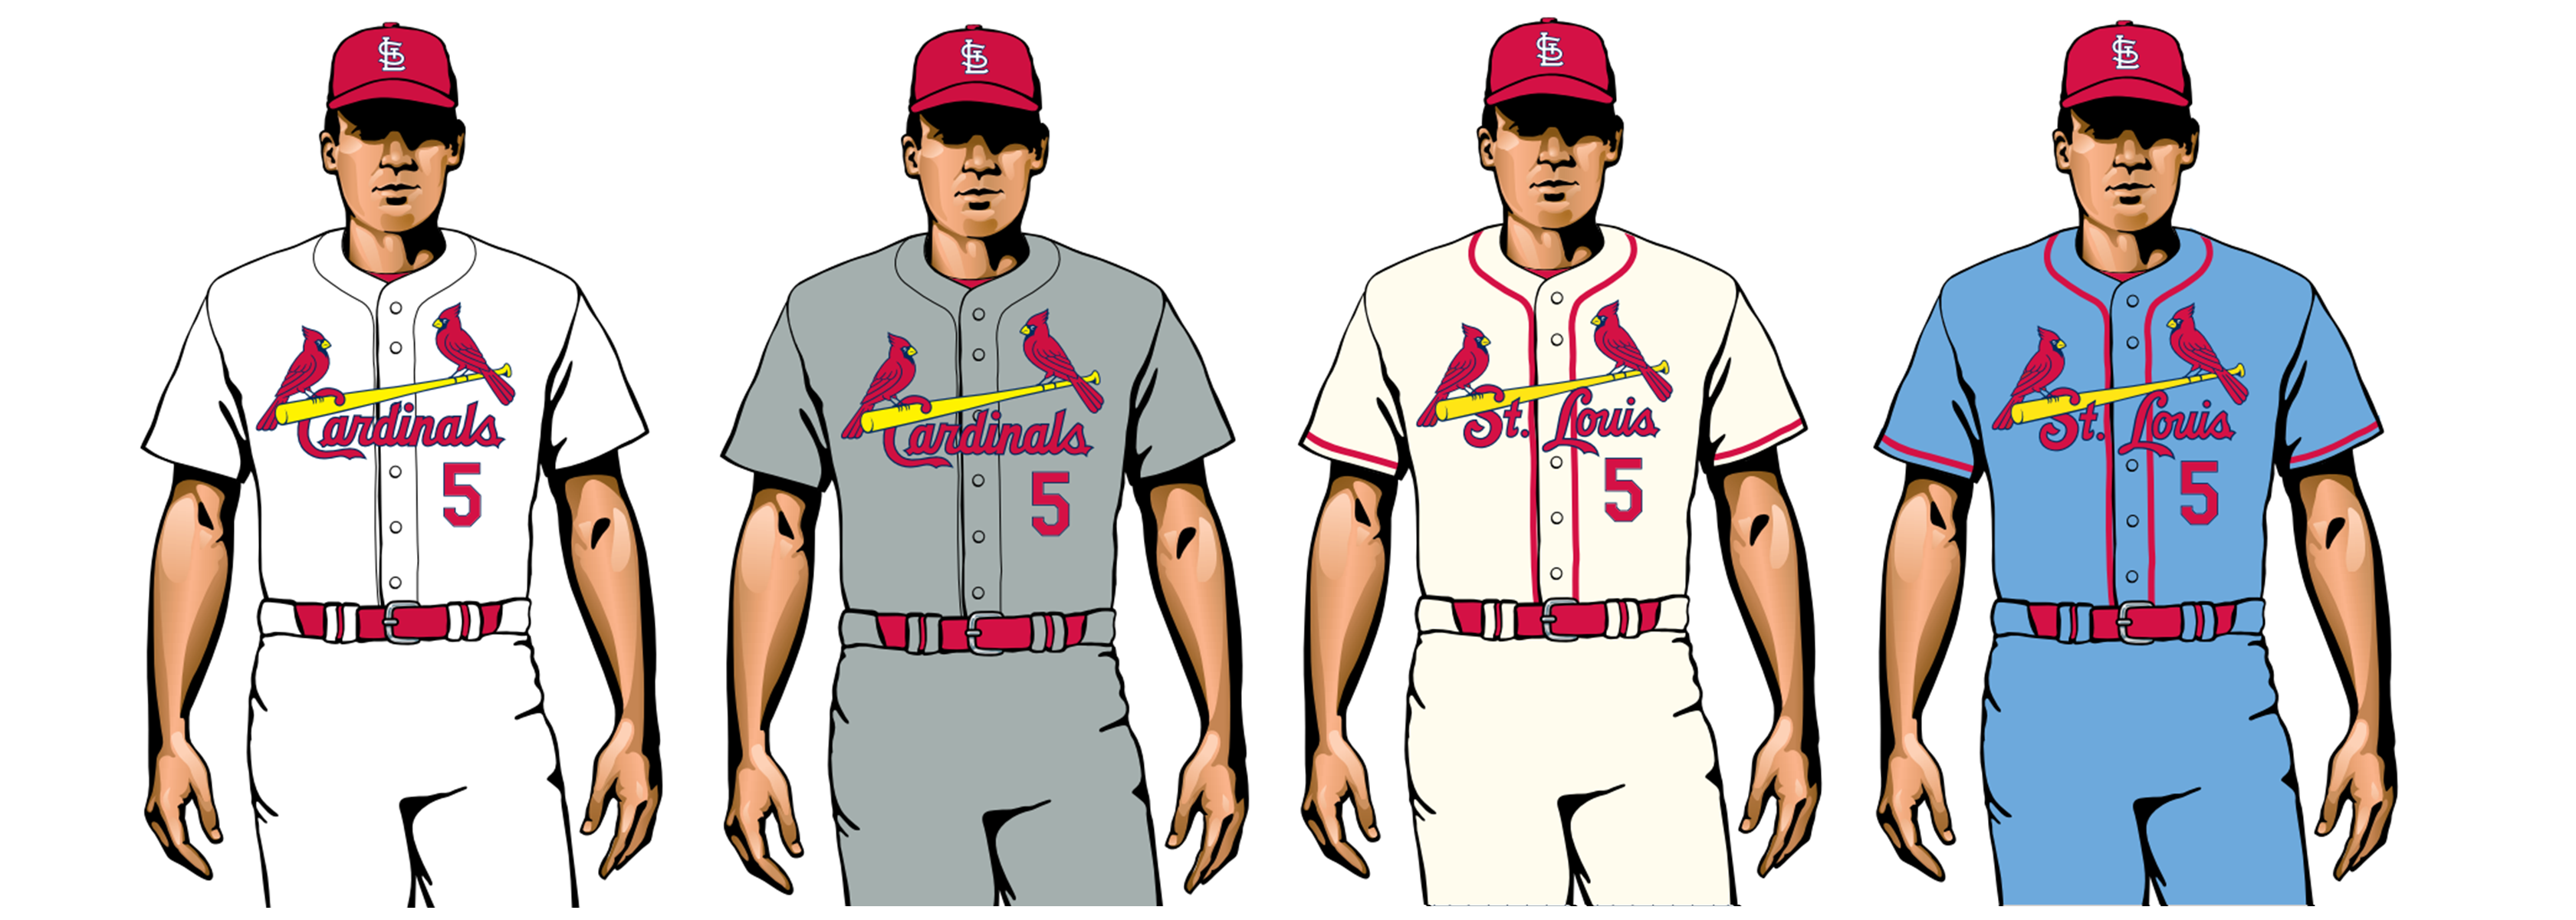 Ranking the Best Uniforms in Major League Baseball